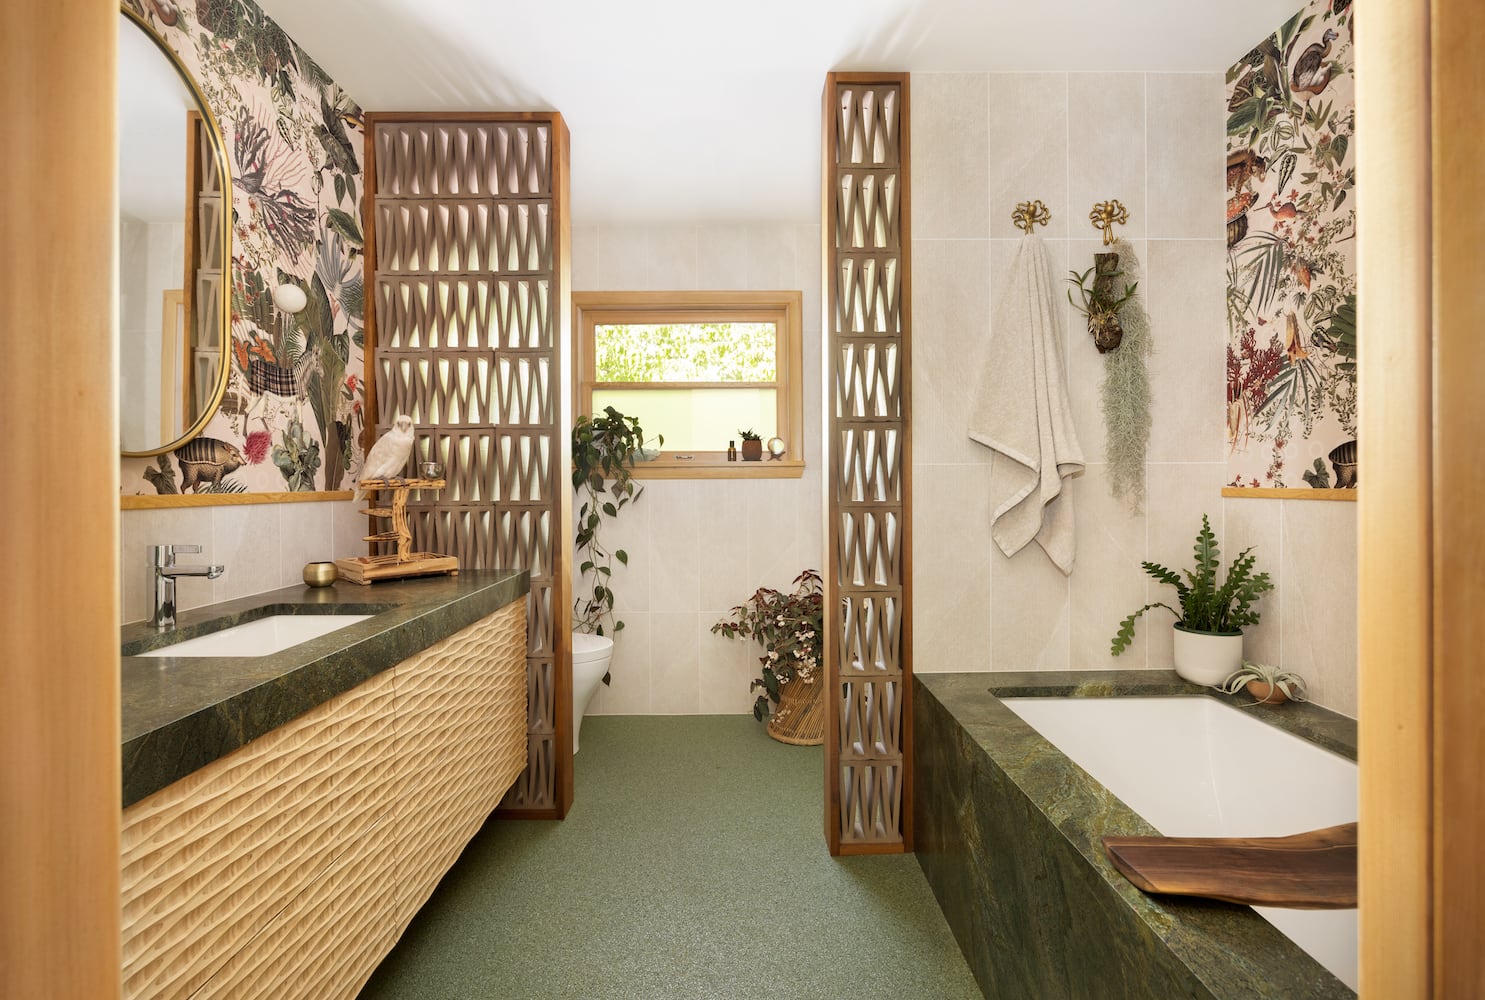 Midcentury farm ranch bathroom renovation with tropical spirit, bamboo, bathtub